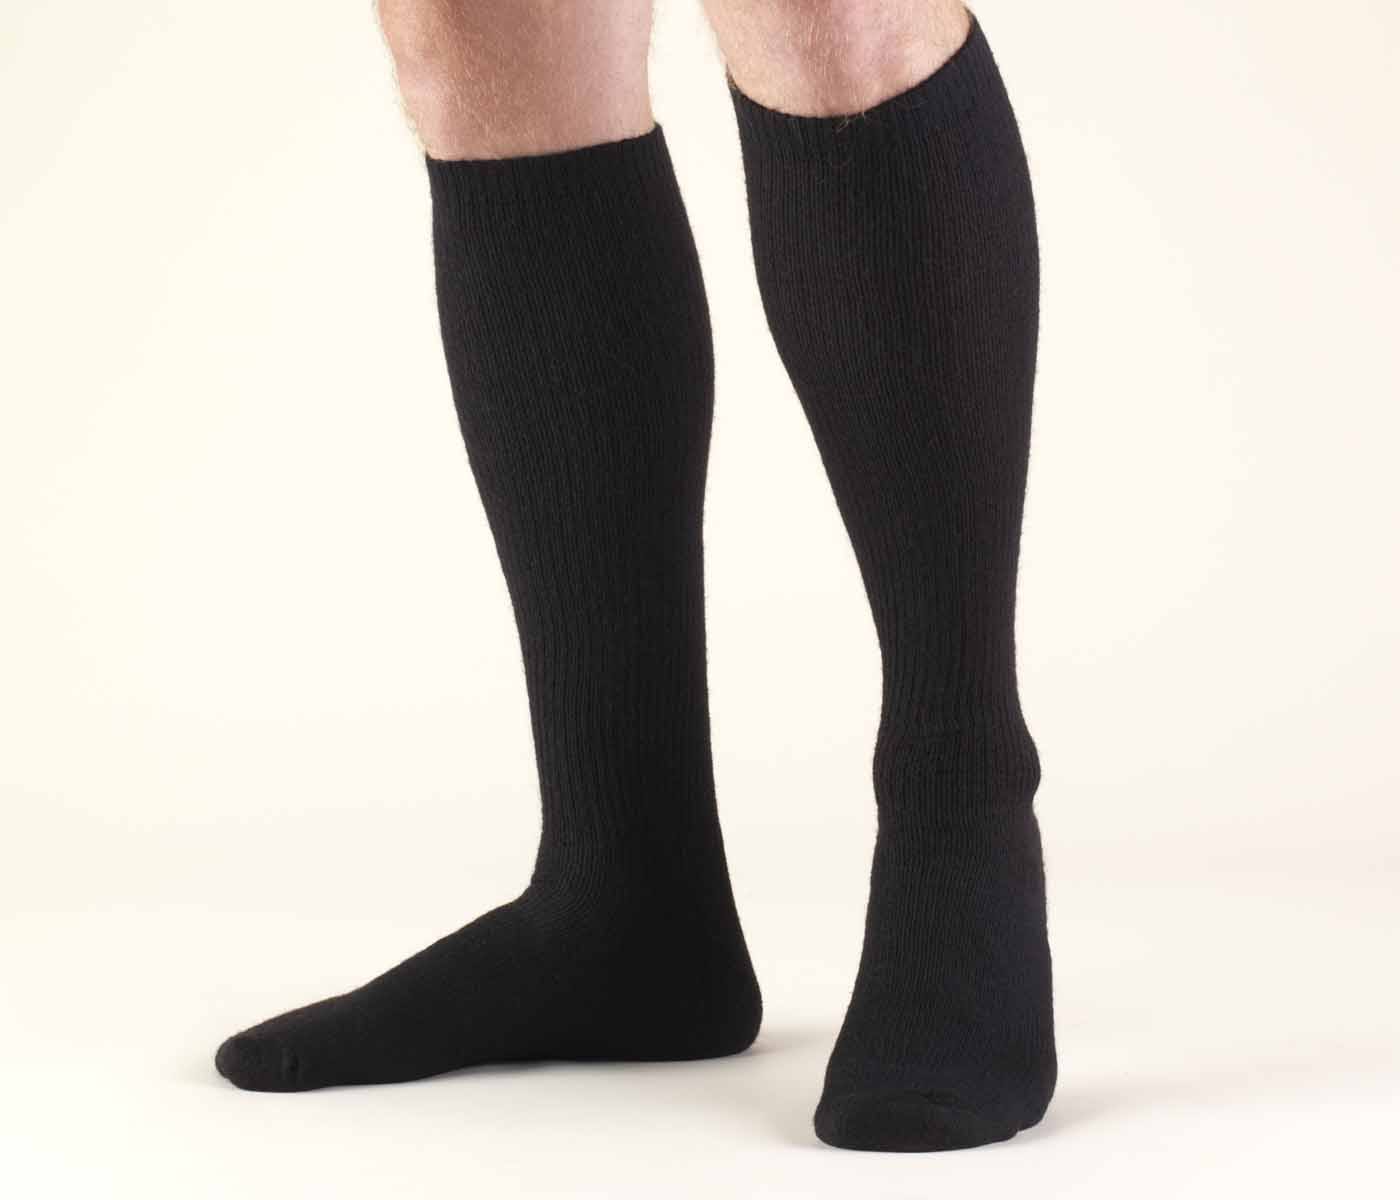 Truform Diabetic Socks - Black, 3 Pairs